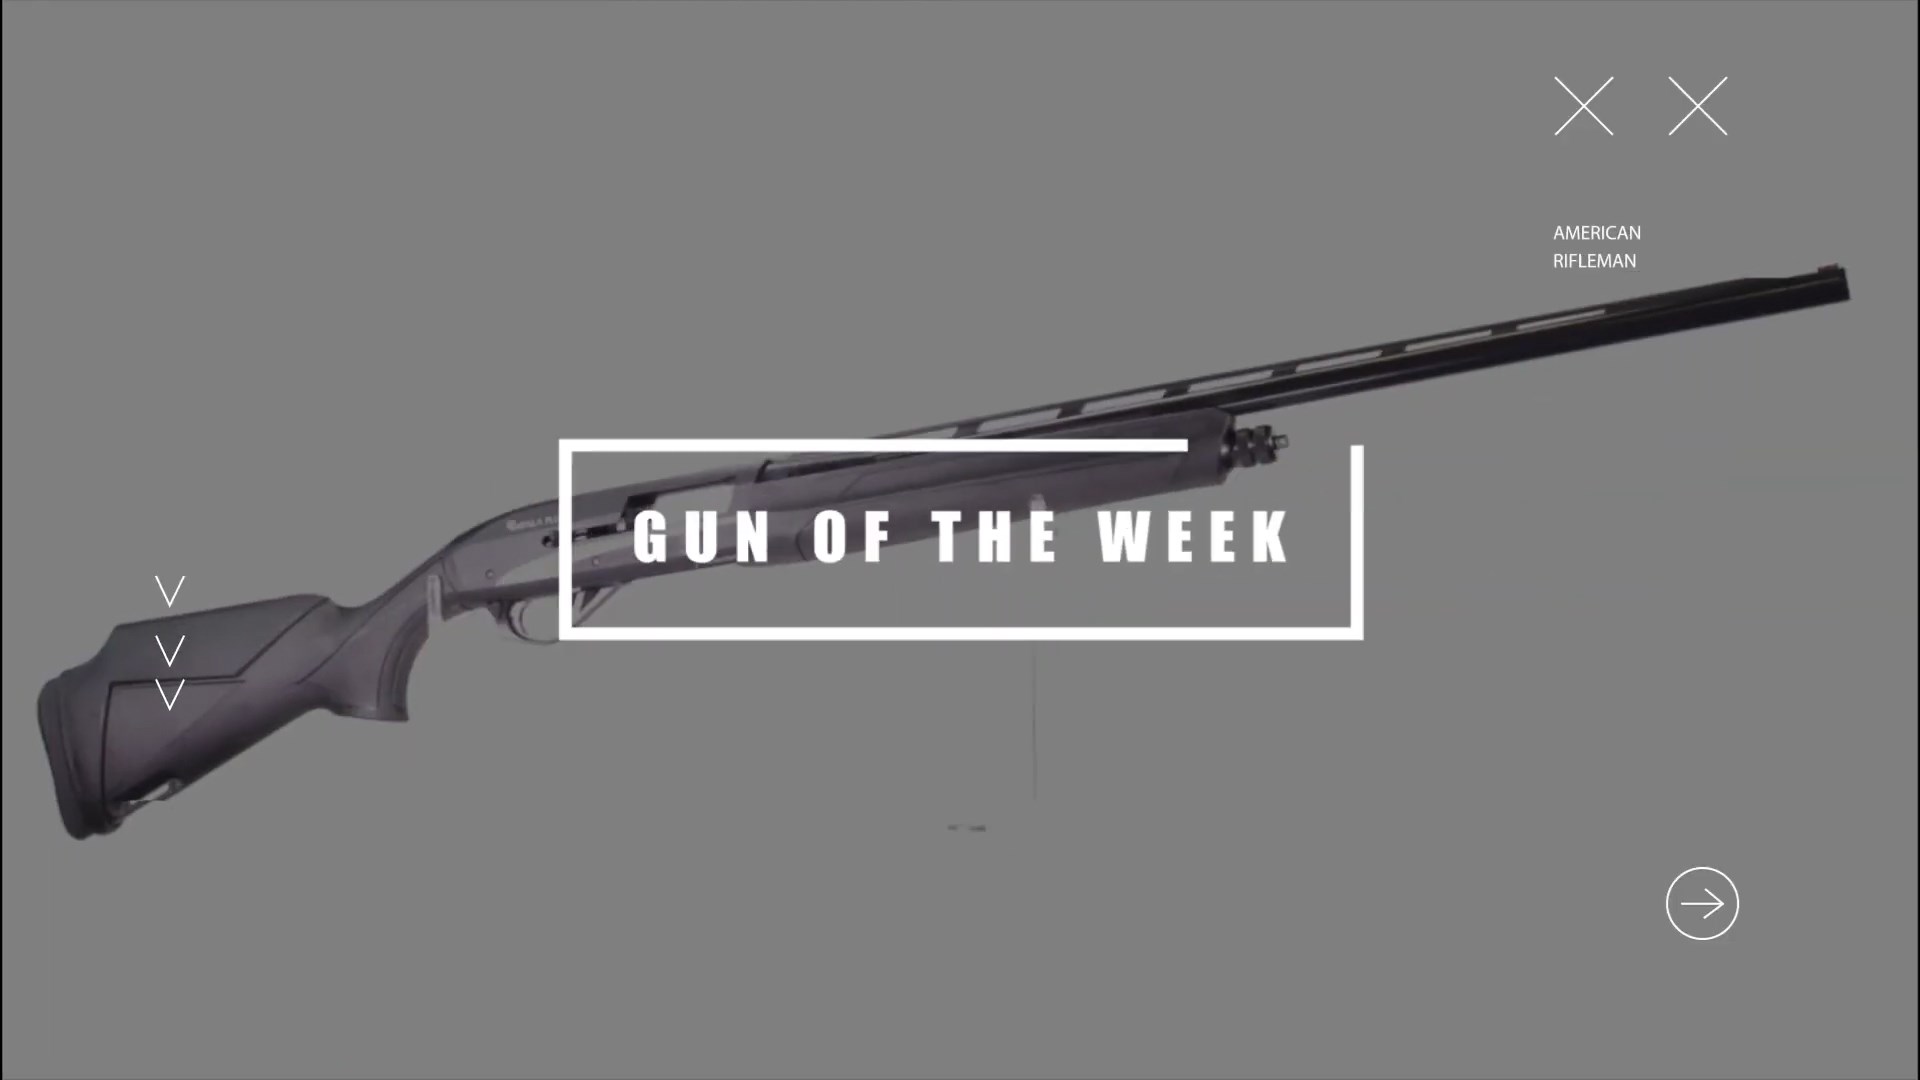 Impala Plus Nero S shotgun GUN OF THE WEEK AMERICAN RIFLEMAN text overlay shotgun background gray